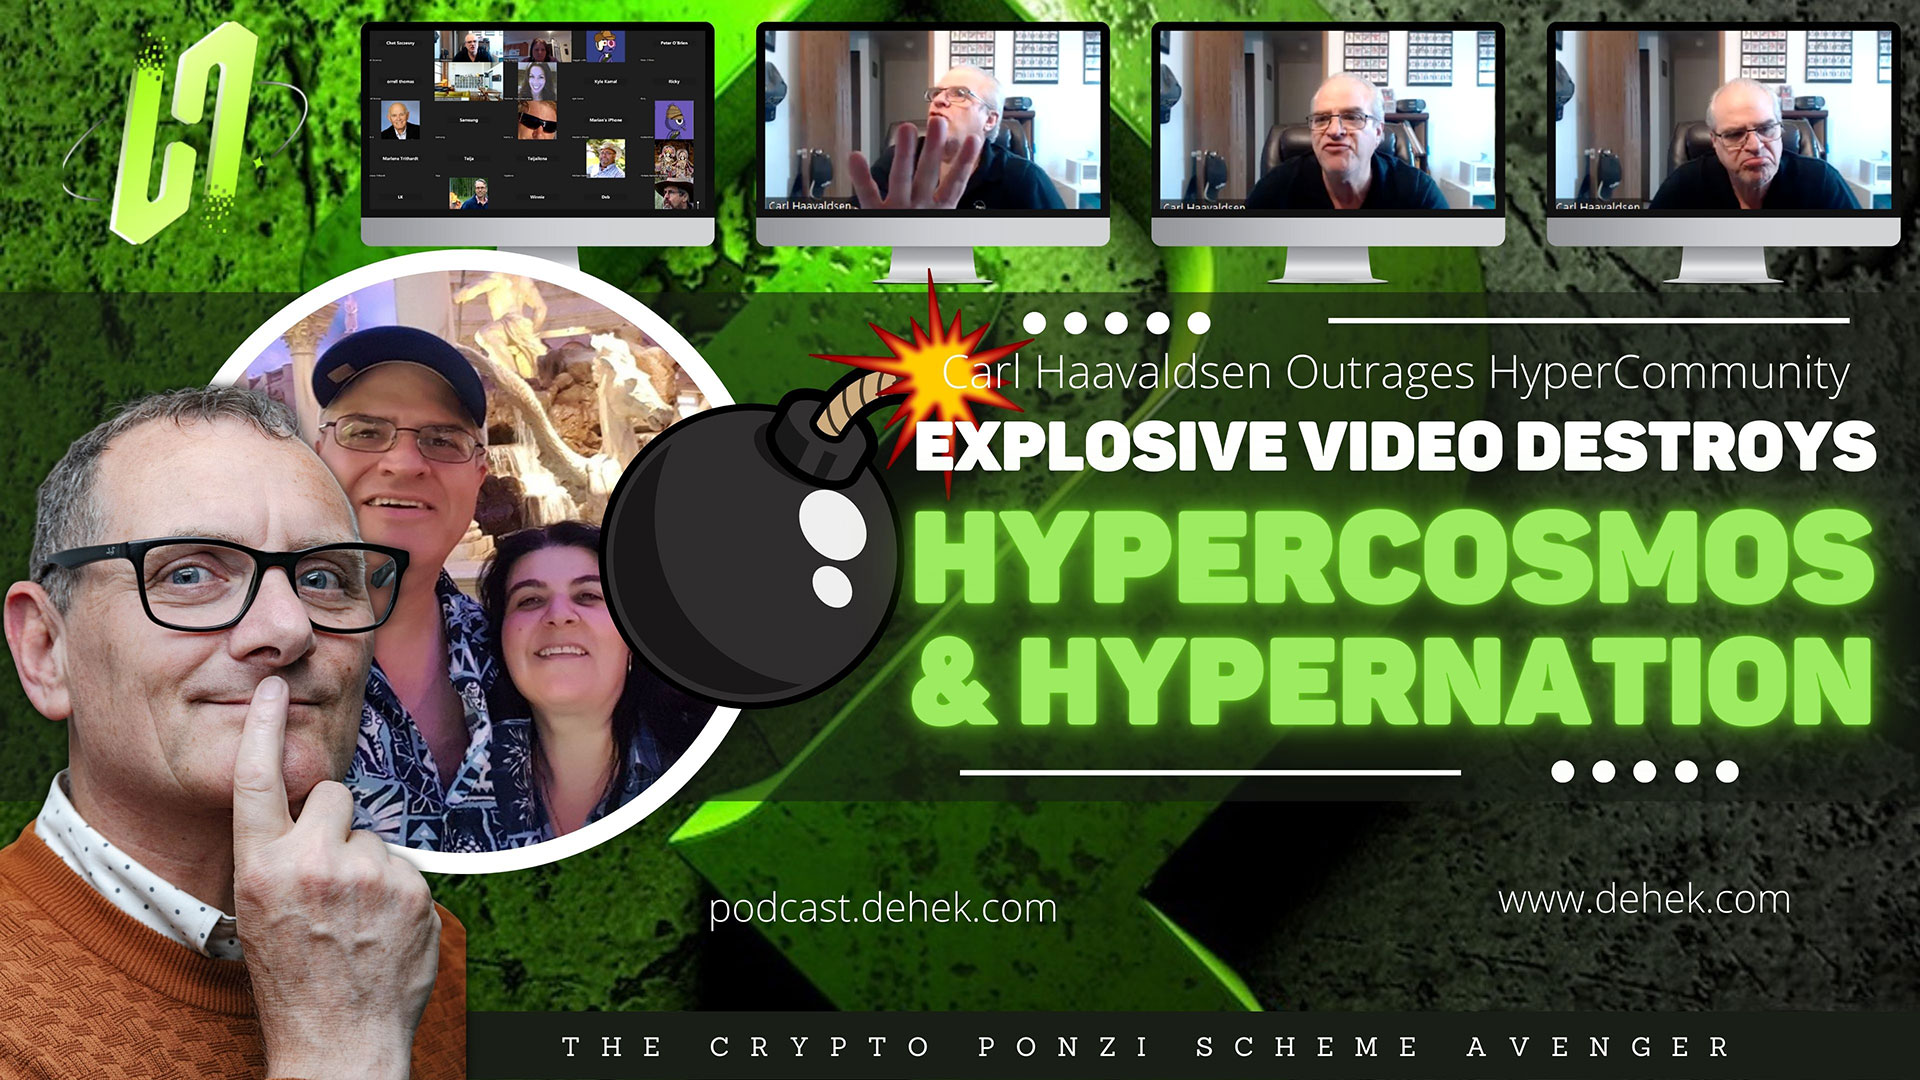 Carl Haavaldsen Outrages HyperCommunity EXPLOSIVE VIDEO destroys HYPERCOSMOS and HYPERNATION